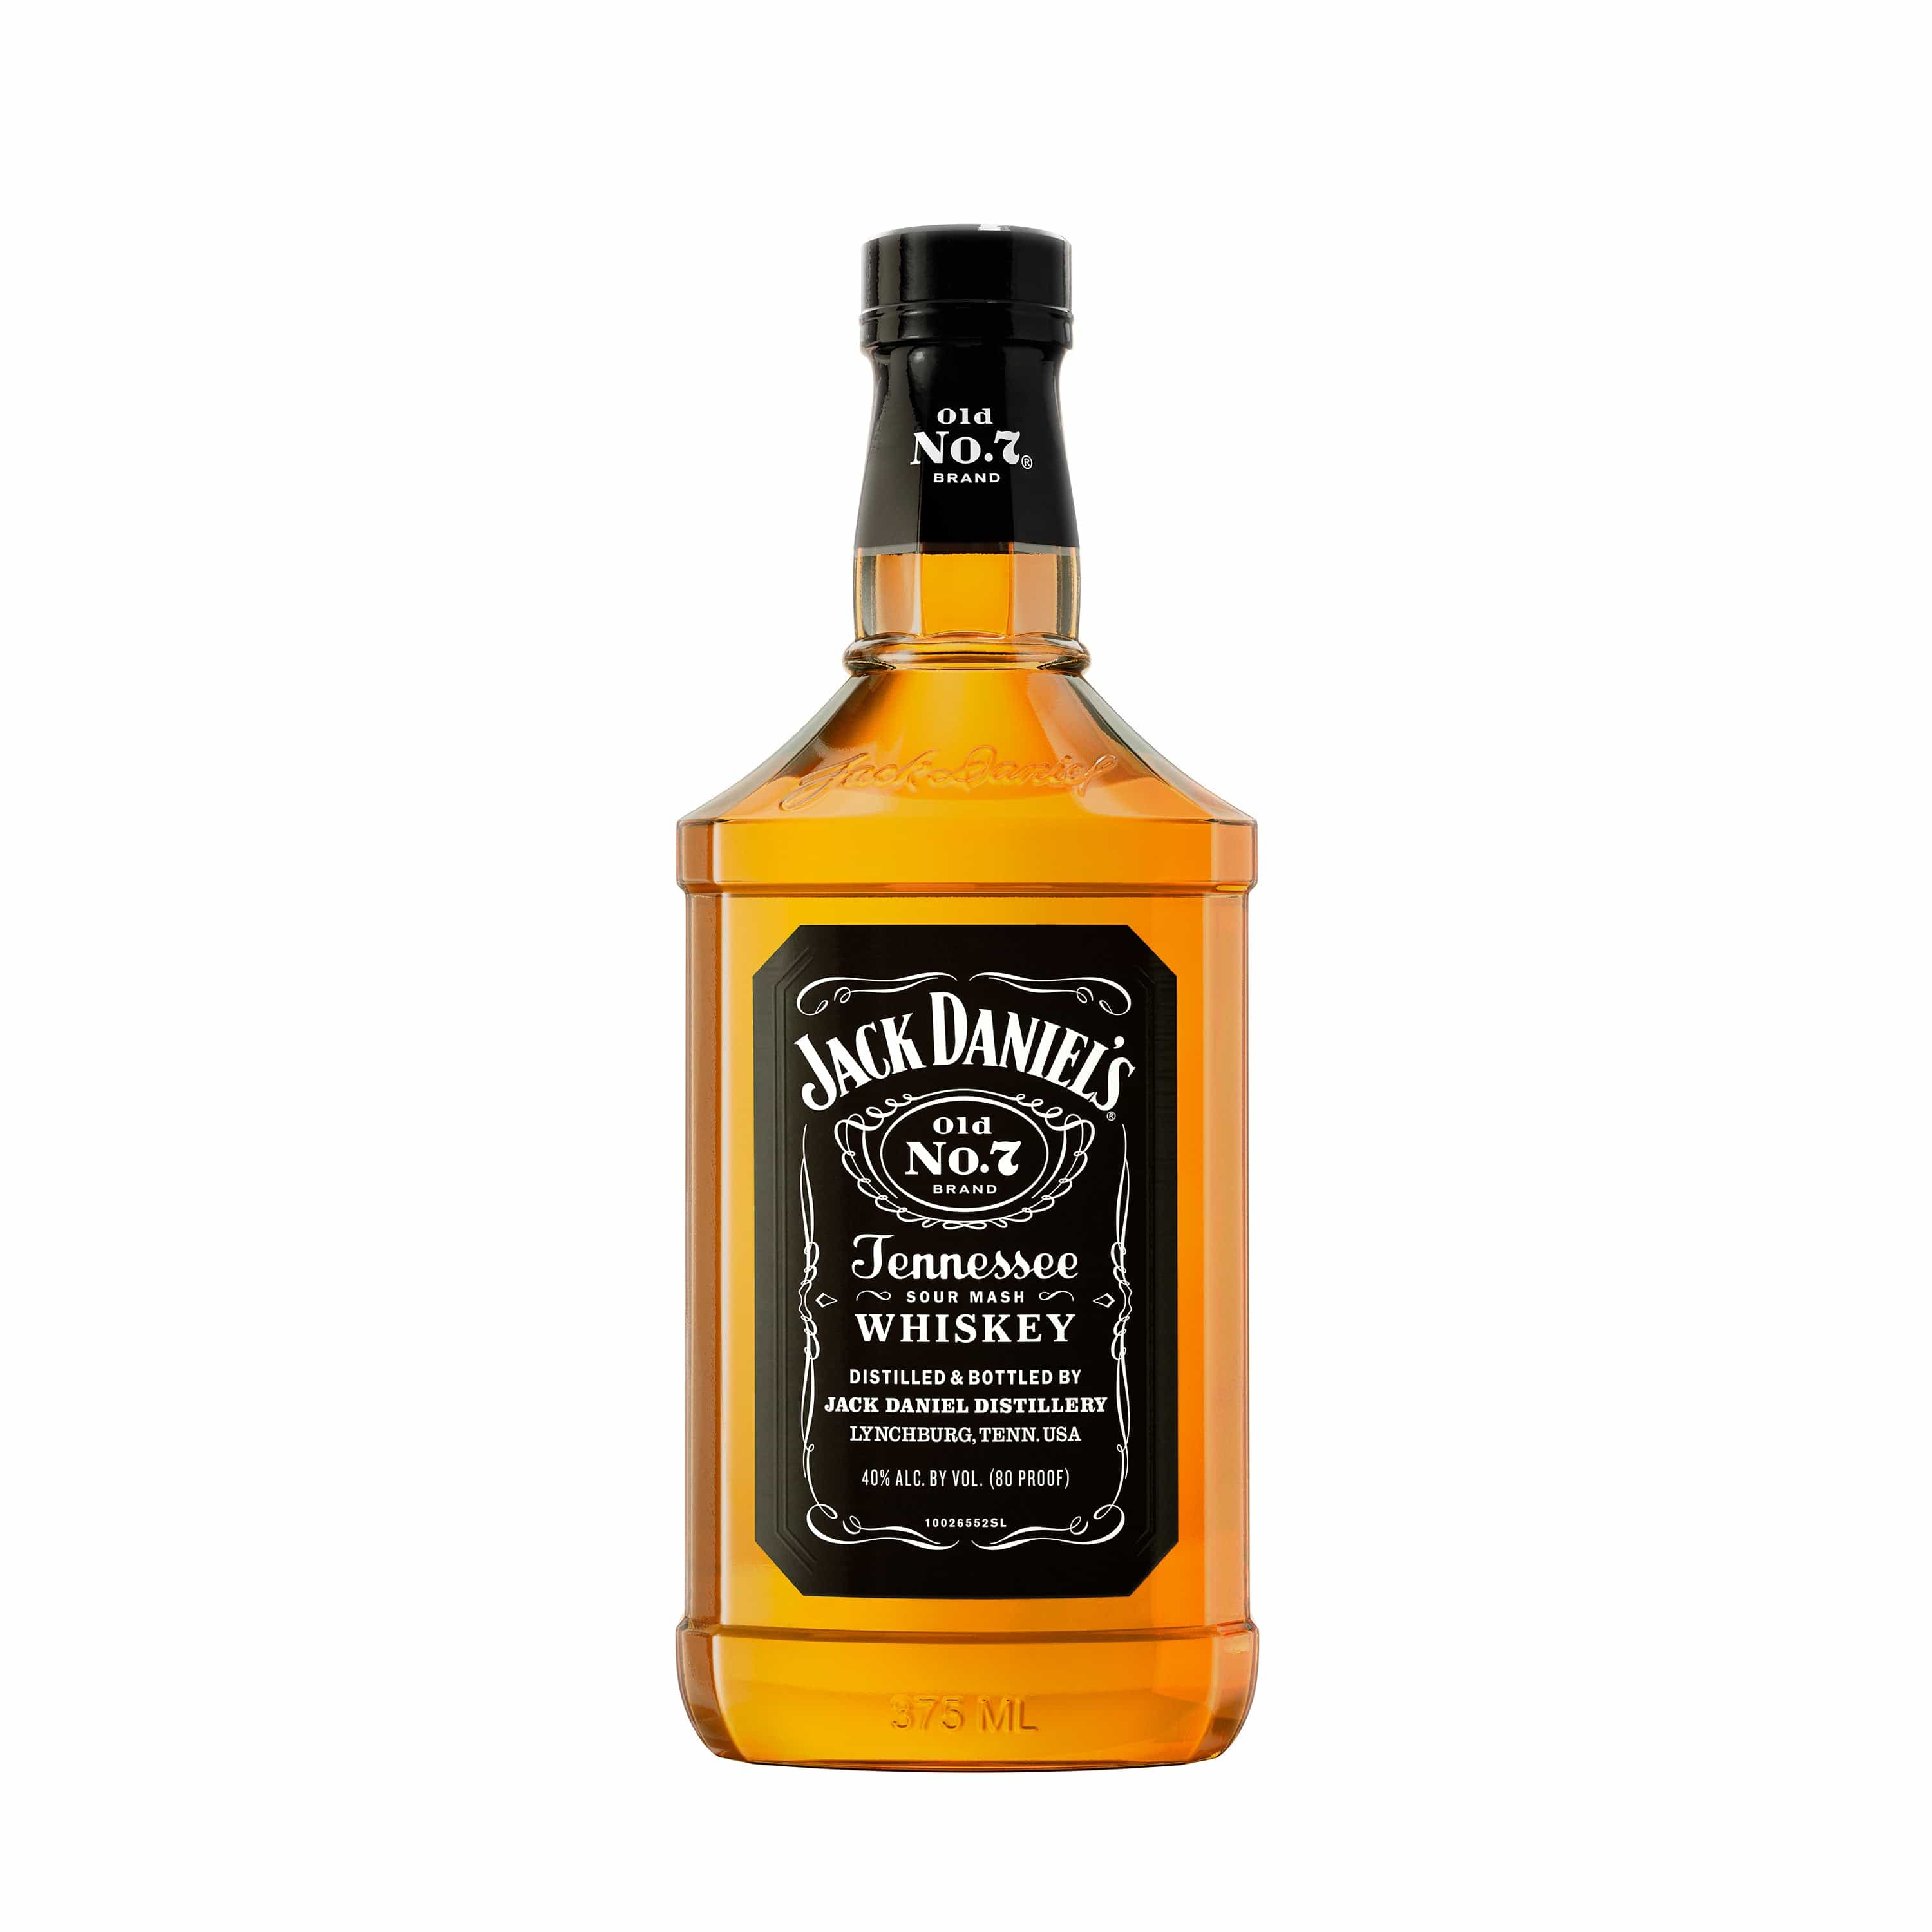 Jack Daniels Original No.7 Tennessee Whiskey 375ml - Barbank